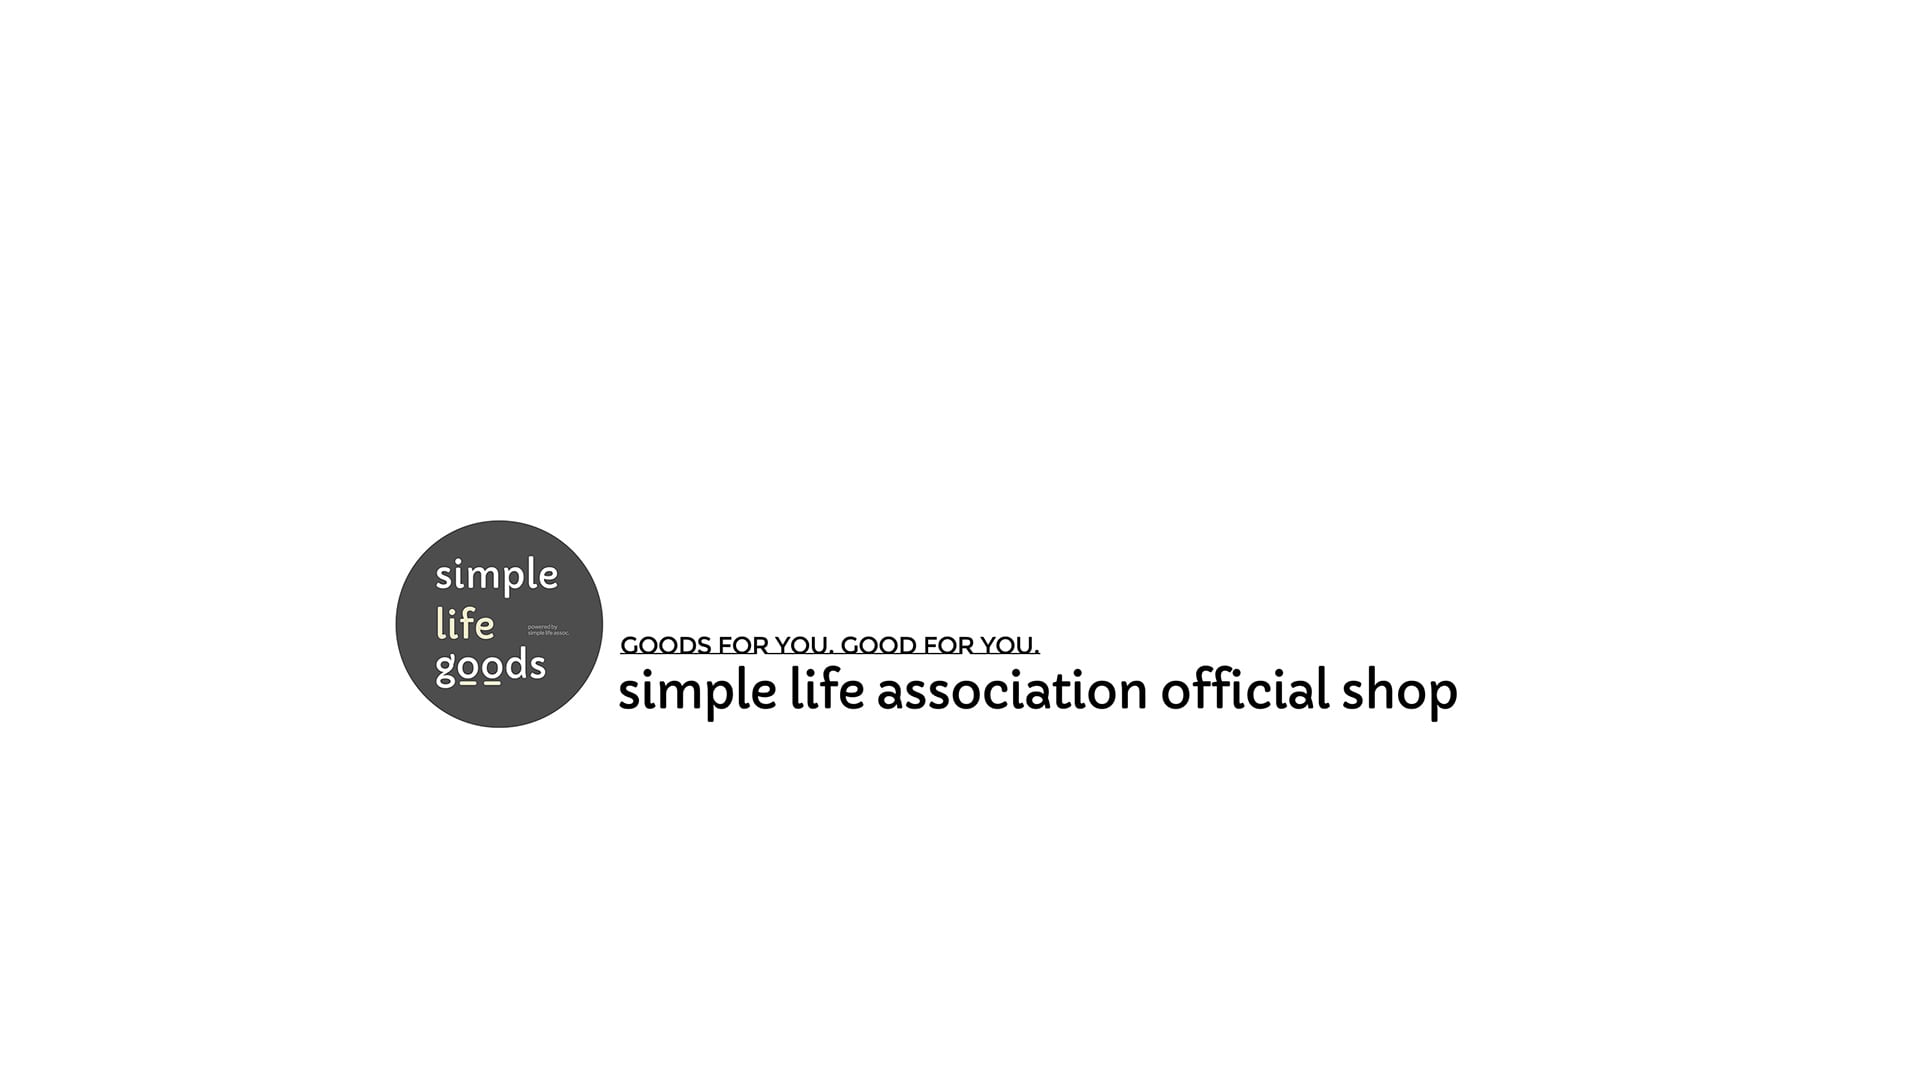 simple life goods